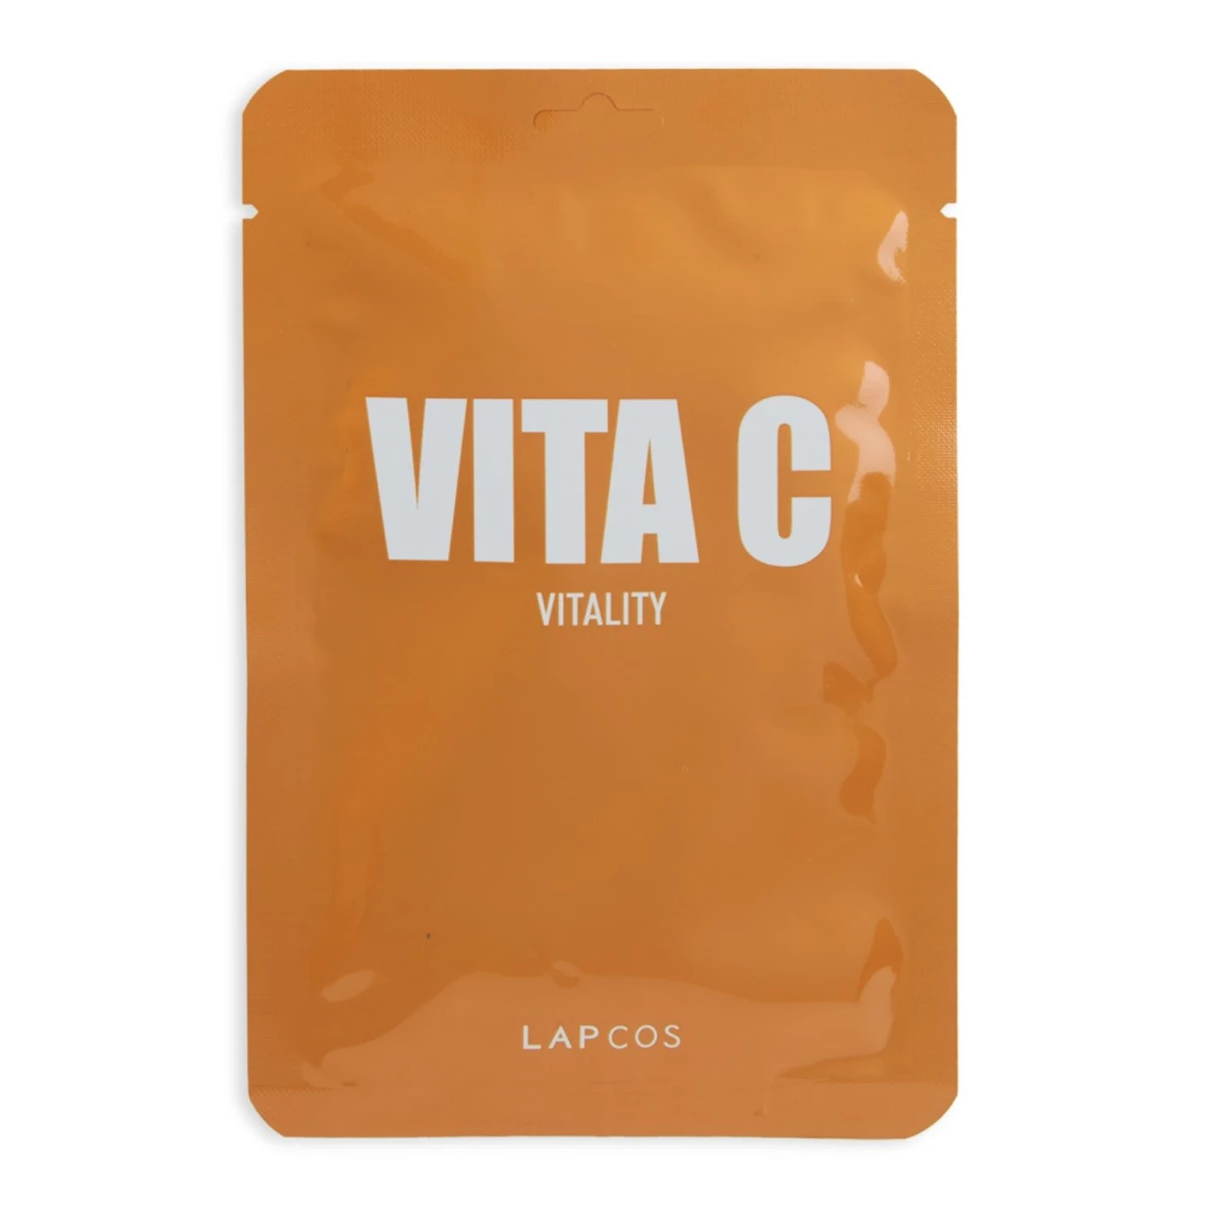 Orange face mask packaging that reads "VITA C VITALITY LAPCOS"